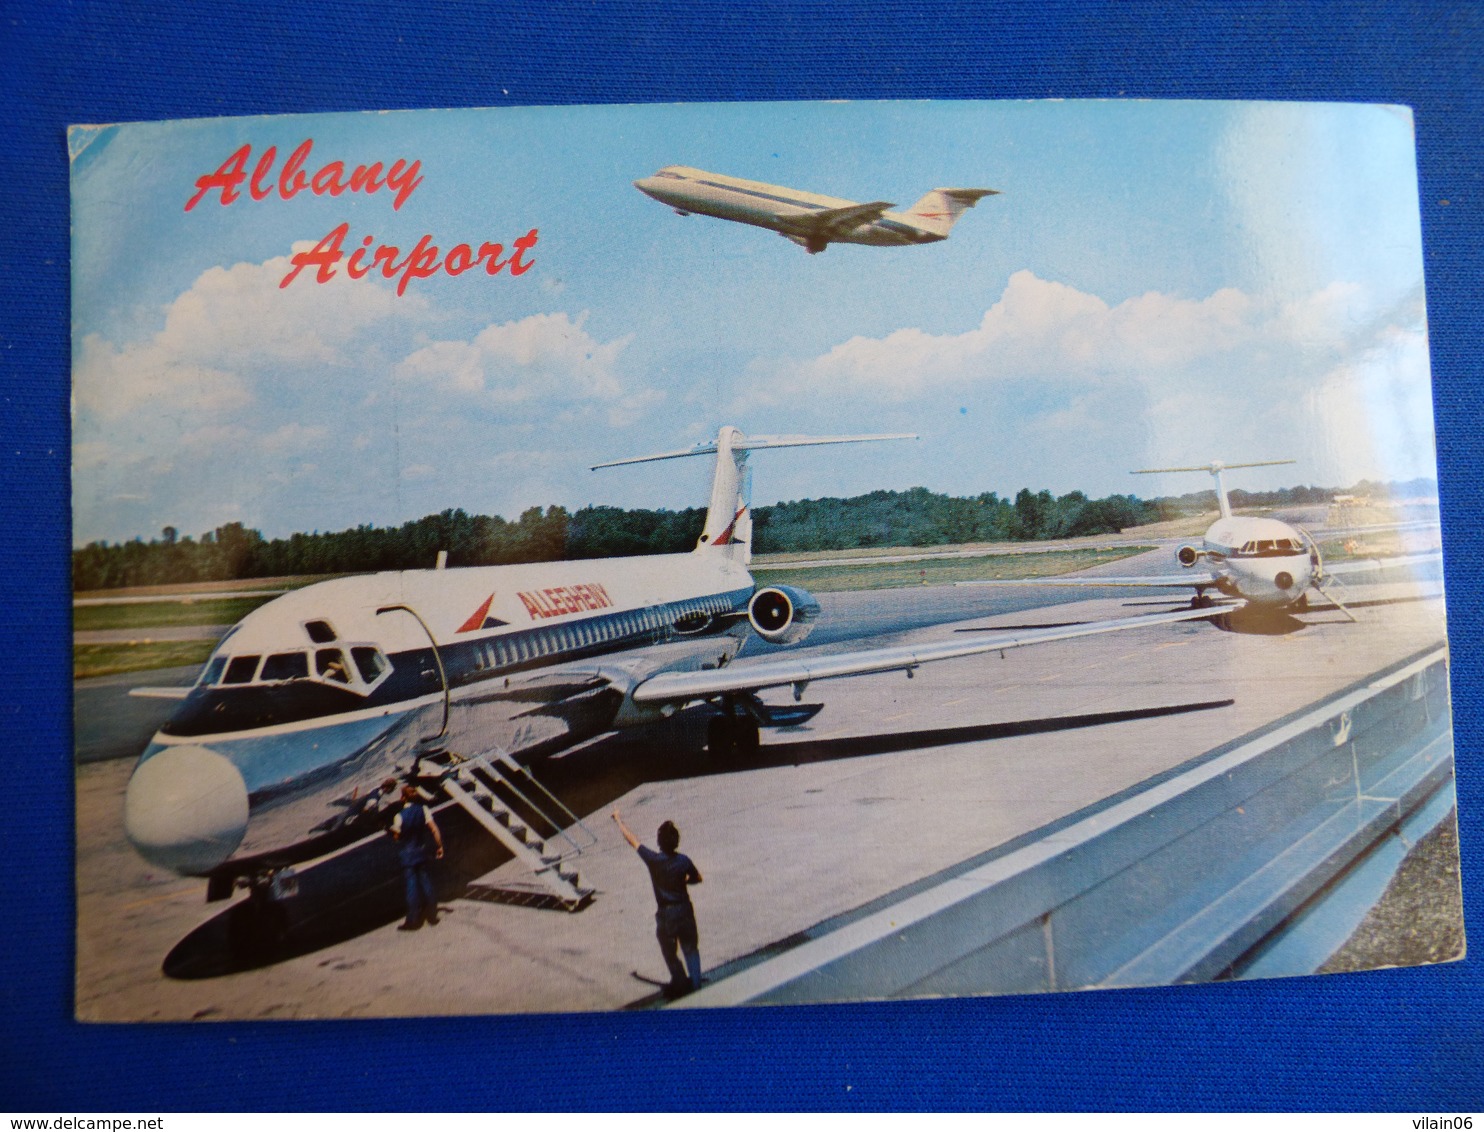 AEROPORT / AIRPORT / FLUGHAFEN    ALBANY AIRPORT  DC 9 ALLEGHENY - Aerodromi